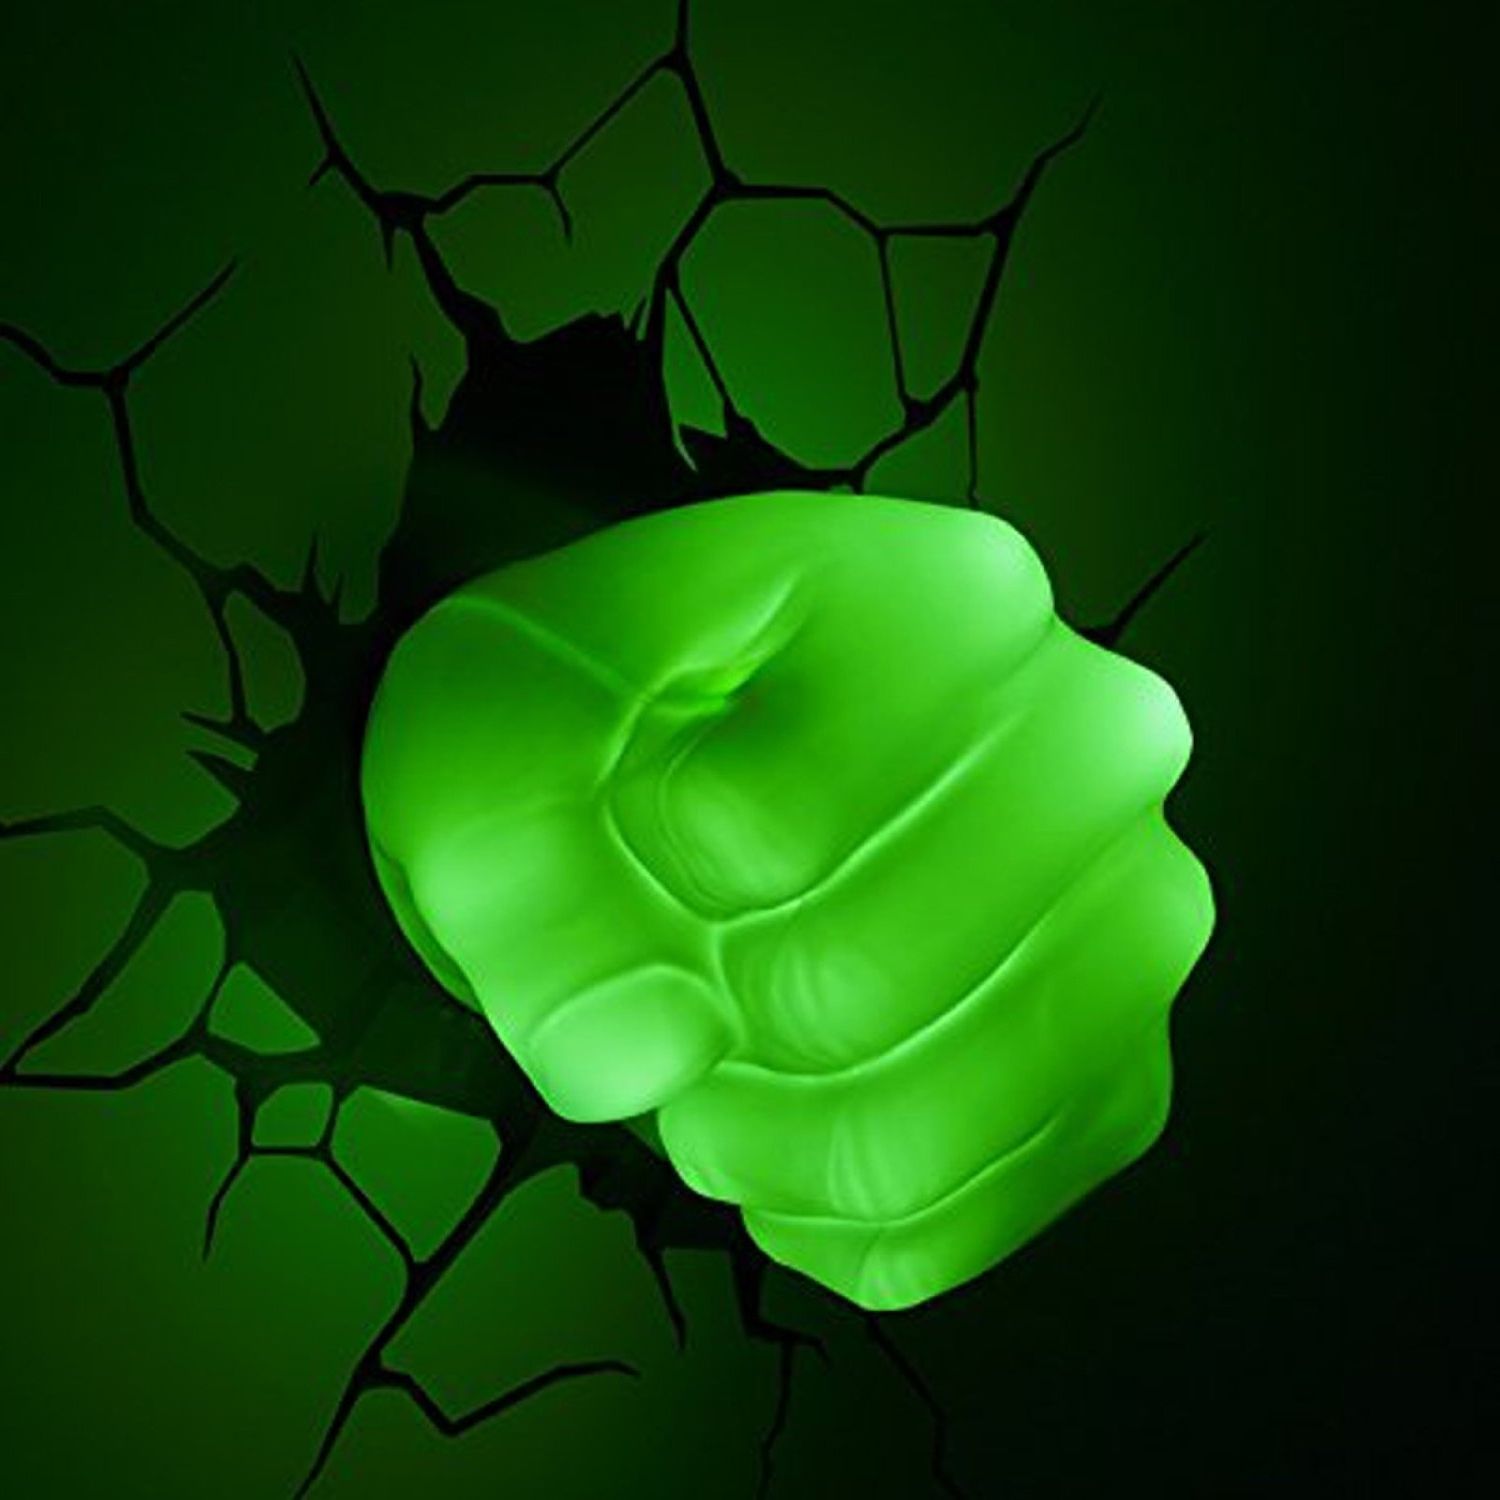 Hulk Hand 3d Wall Art Intended For Newest The Avengers 3d Wall Art Nightlight – Hulk Hand (View 1 of 15)